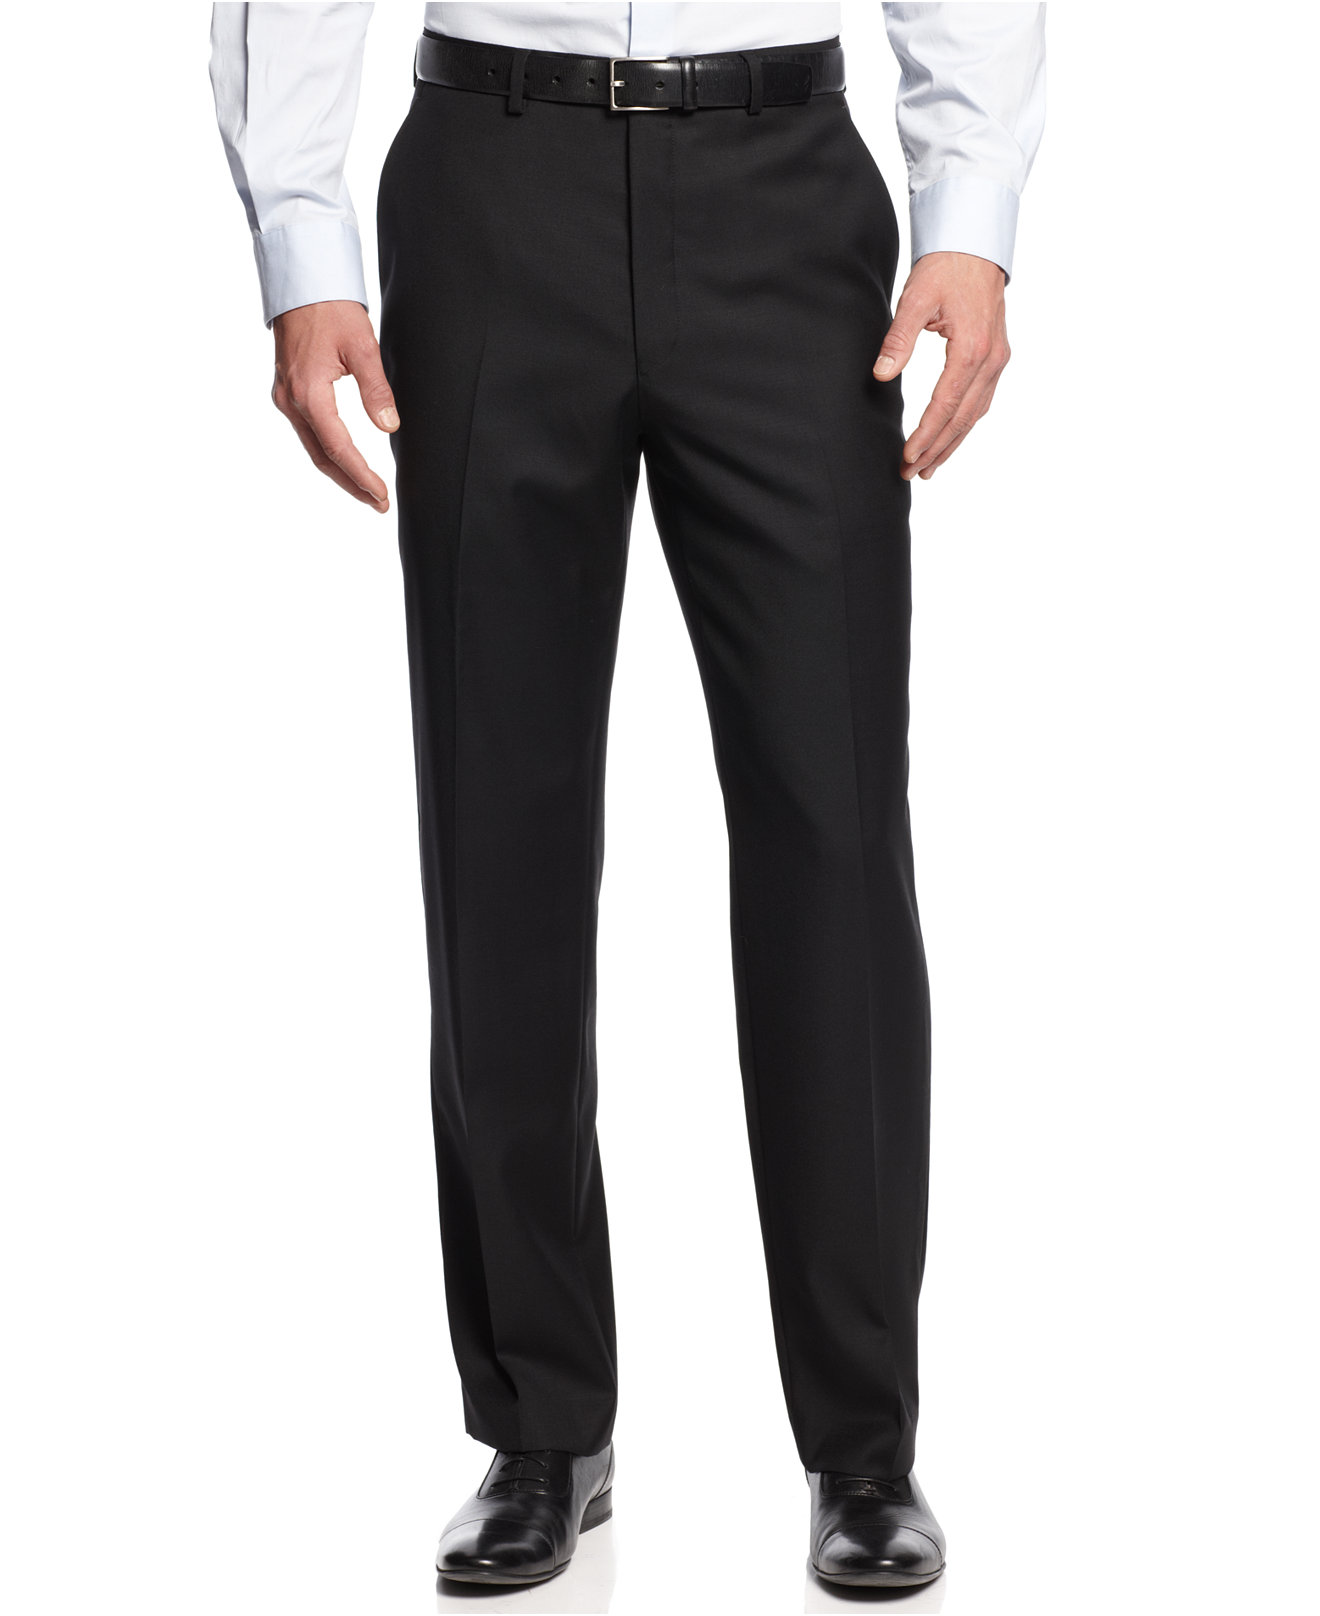 Michael Kors Black Solid Dress Pants